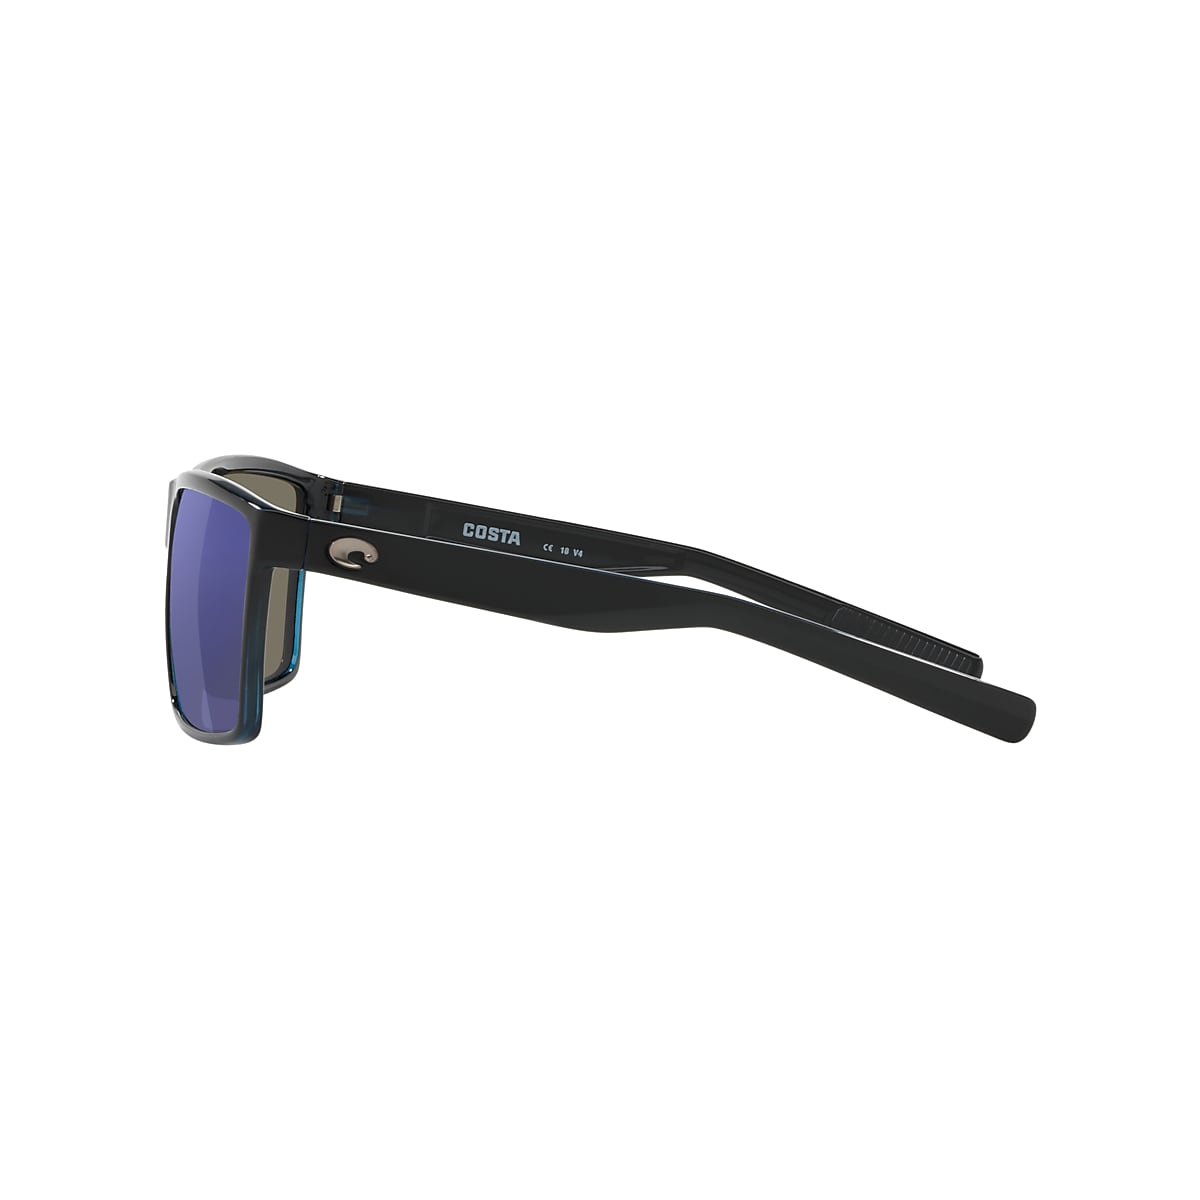 COSTA 6S9018 Rincon Shiny Black - Men Sunglasses, Blue Mirror Lens